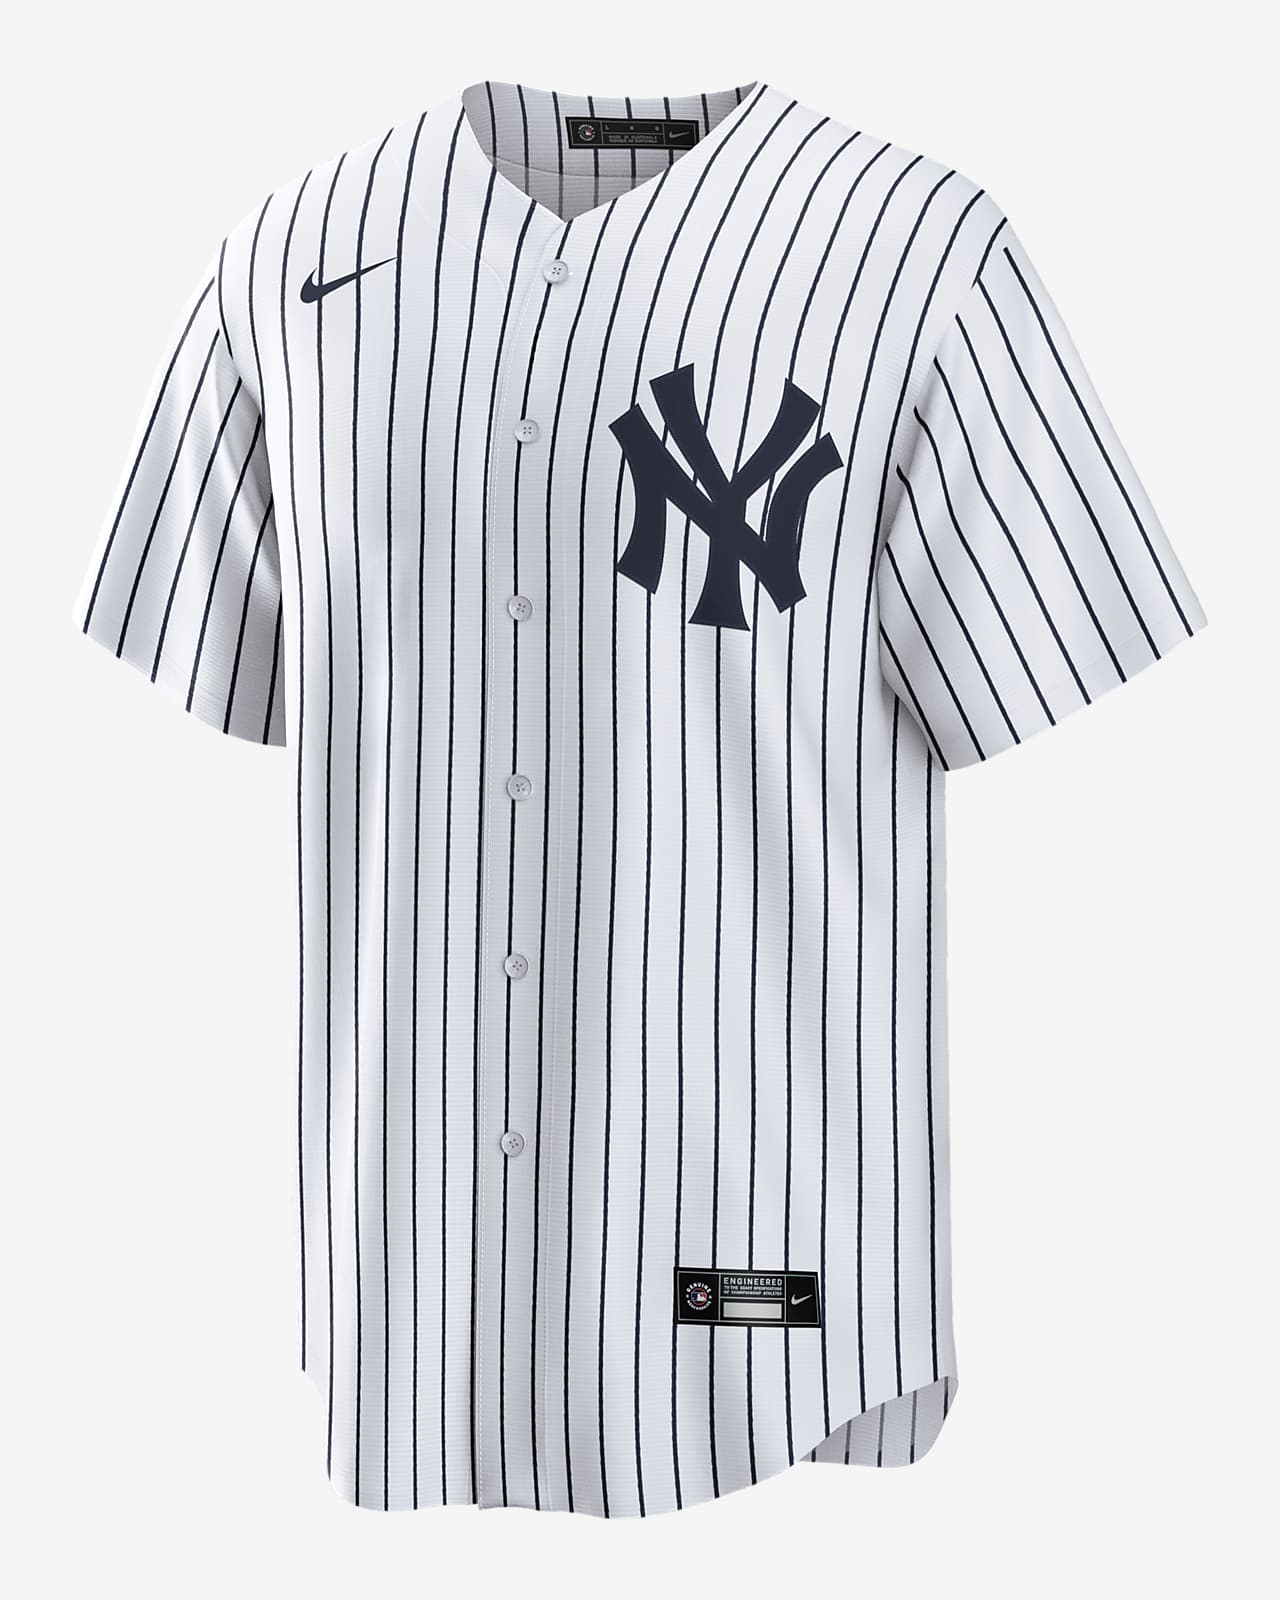 Nike MLB, Shirts & Tops, Yankees Aaron Judge 99 Jersey Youth